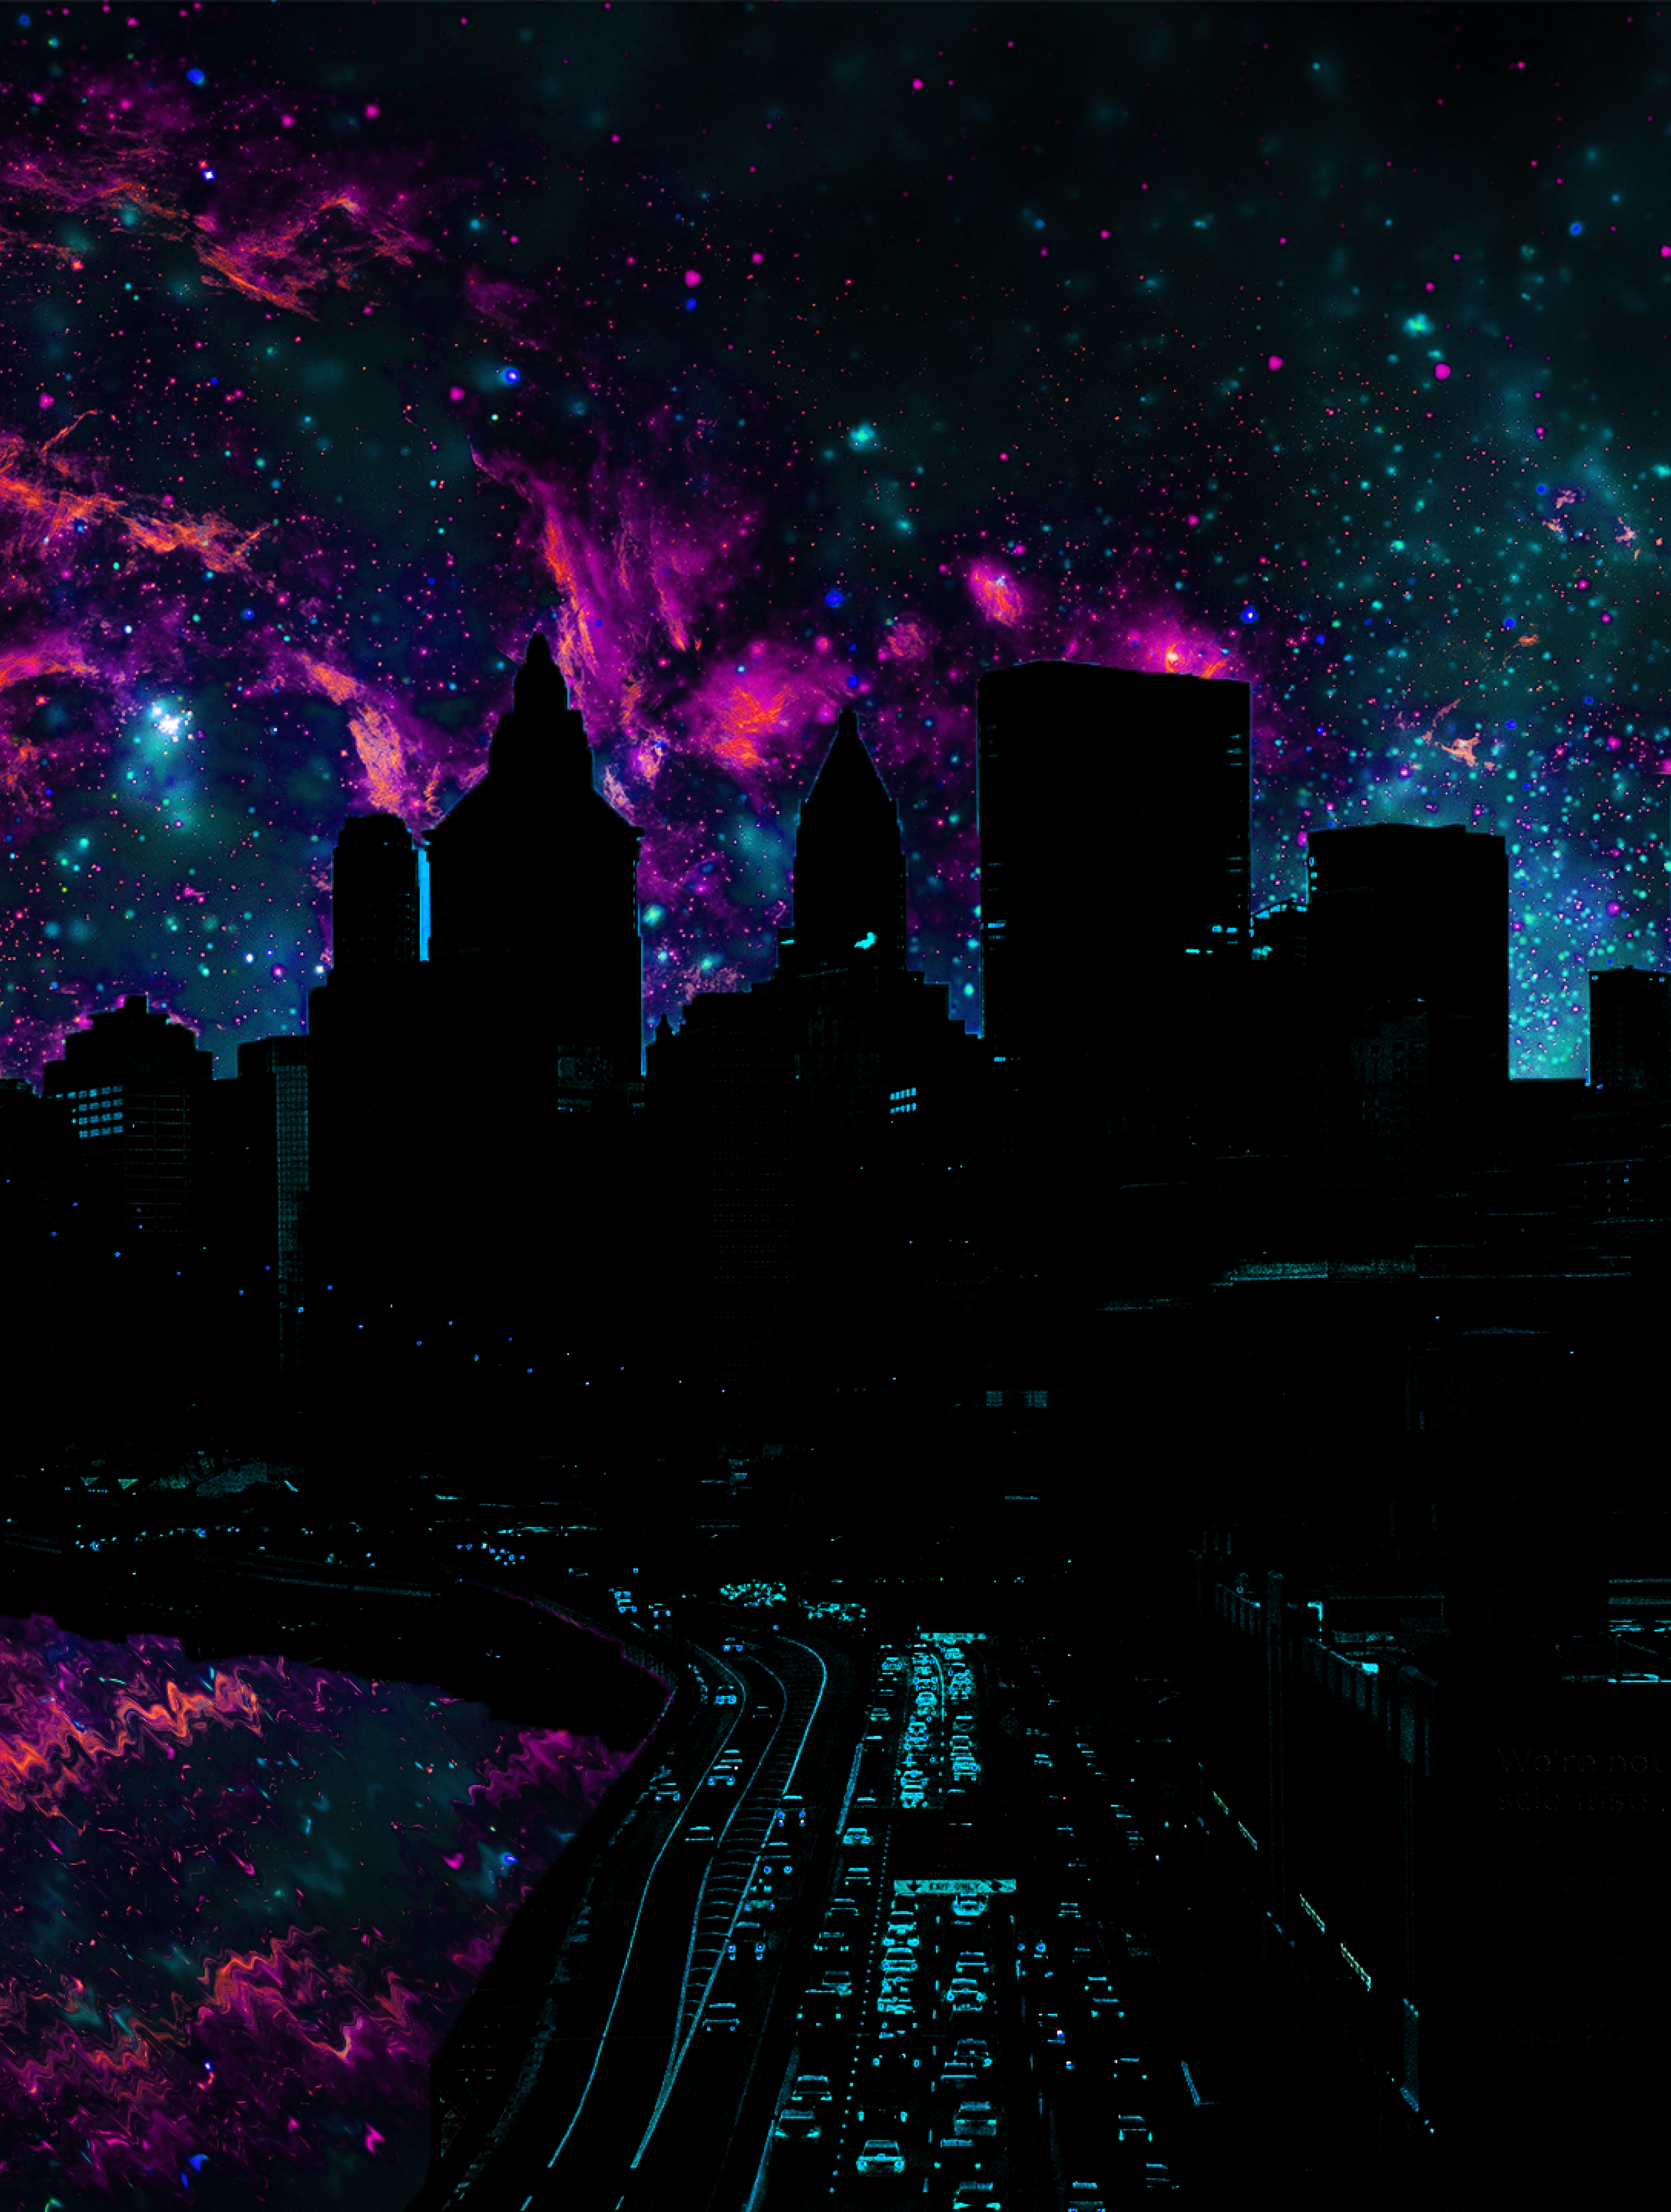 A city skyline with stars and nebulas - Anime city, city